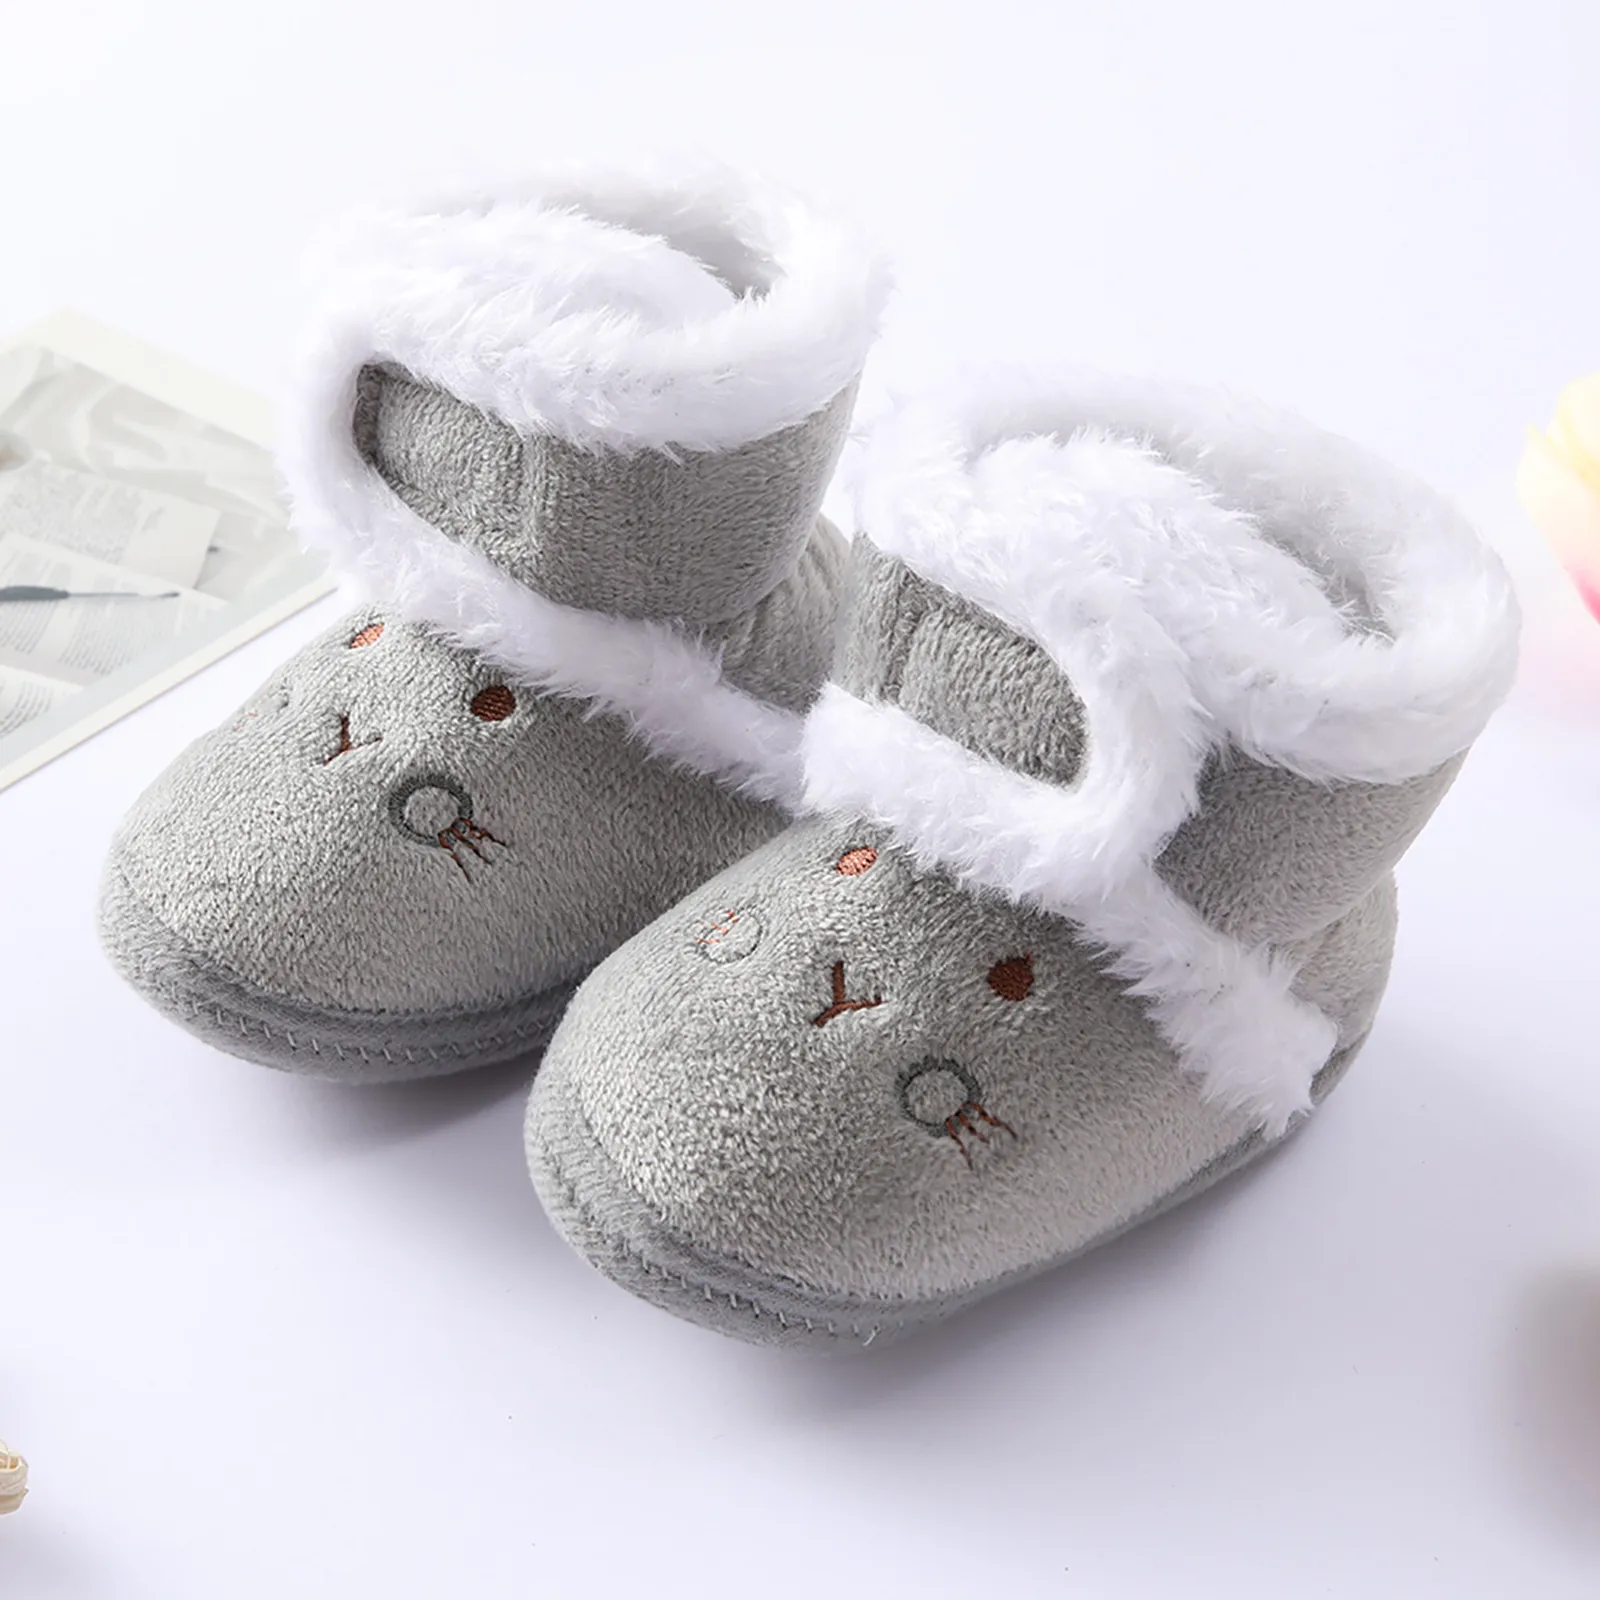 CIOR Baby Toddler Snow Boots Winter Warm Infant Bootie Anti-Slip Kids Newborn First Walker Outdoor Shoes for Girls Boys 